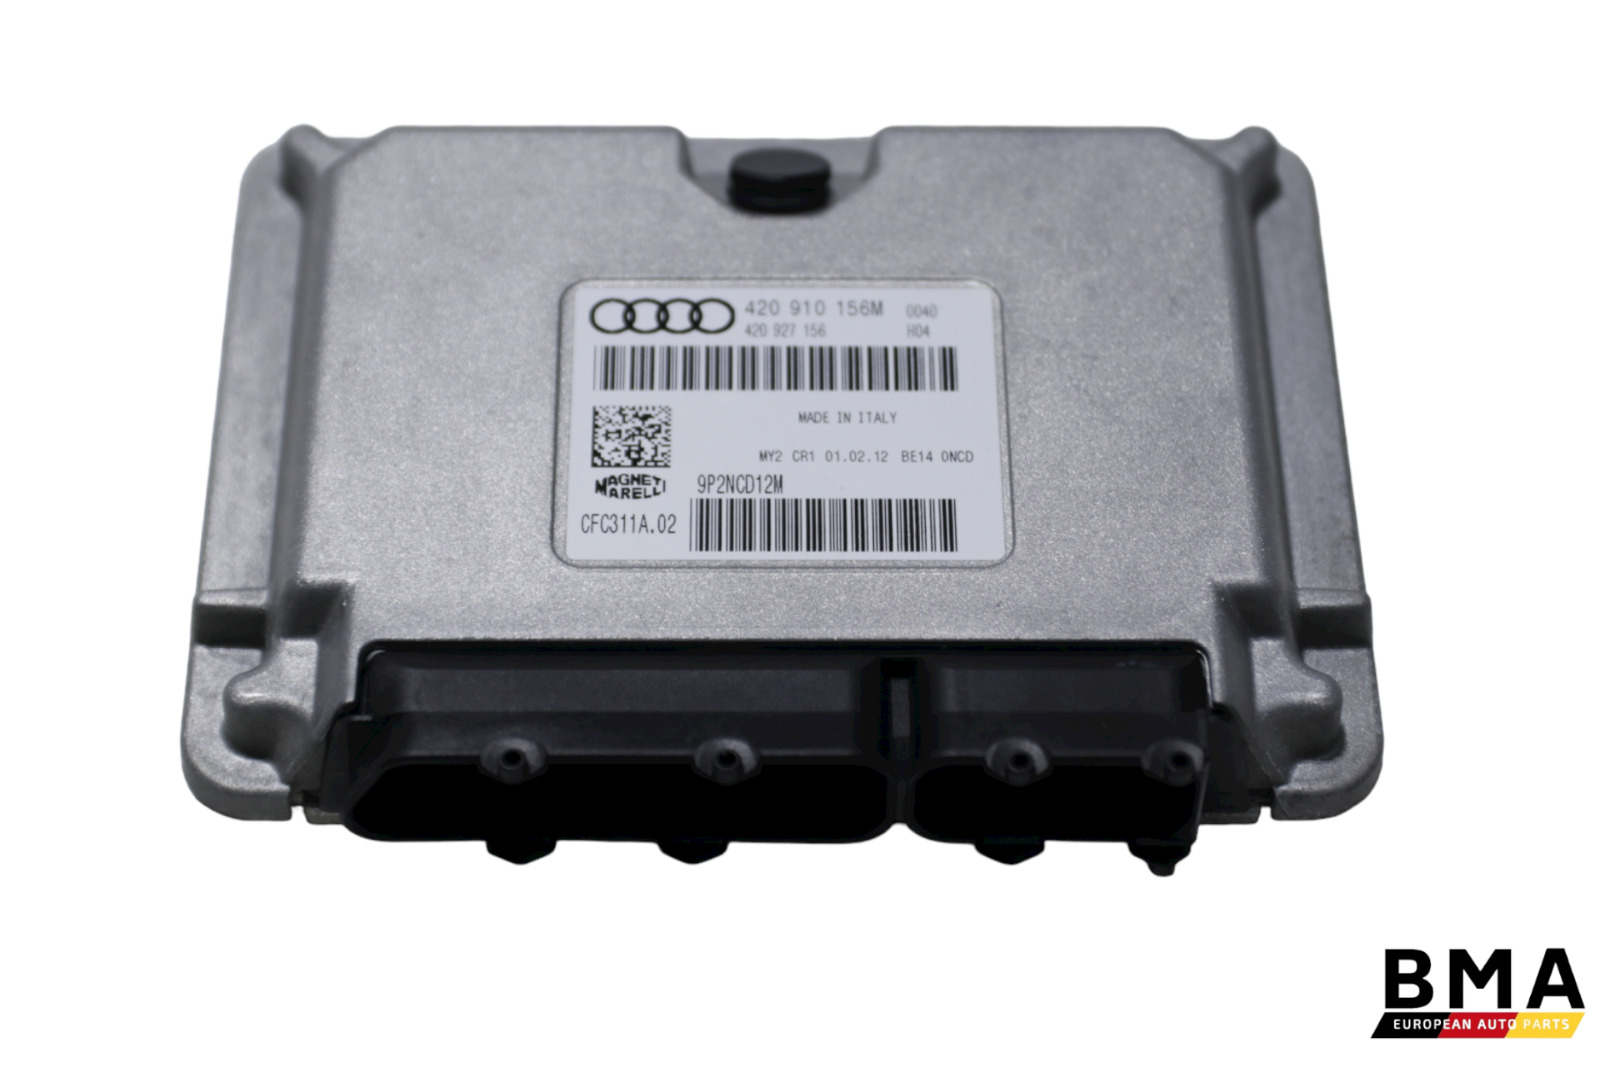 Audi R8 V10 Transmission Control Module Unit ECU 420910156M 2008 - 2015 Oem